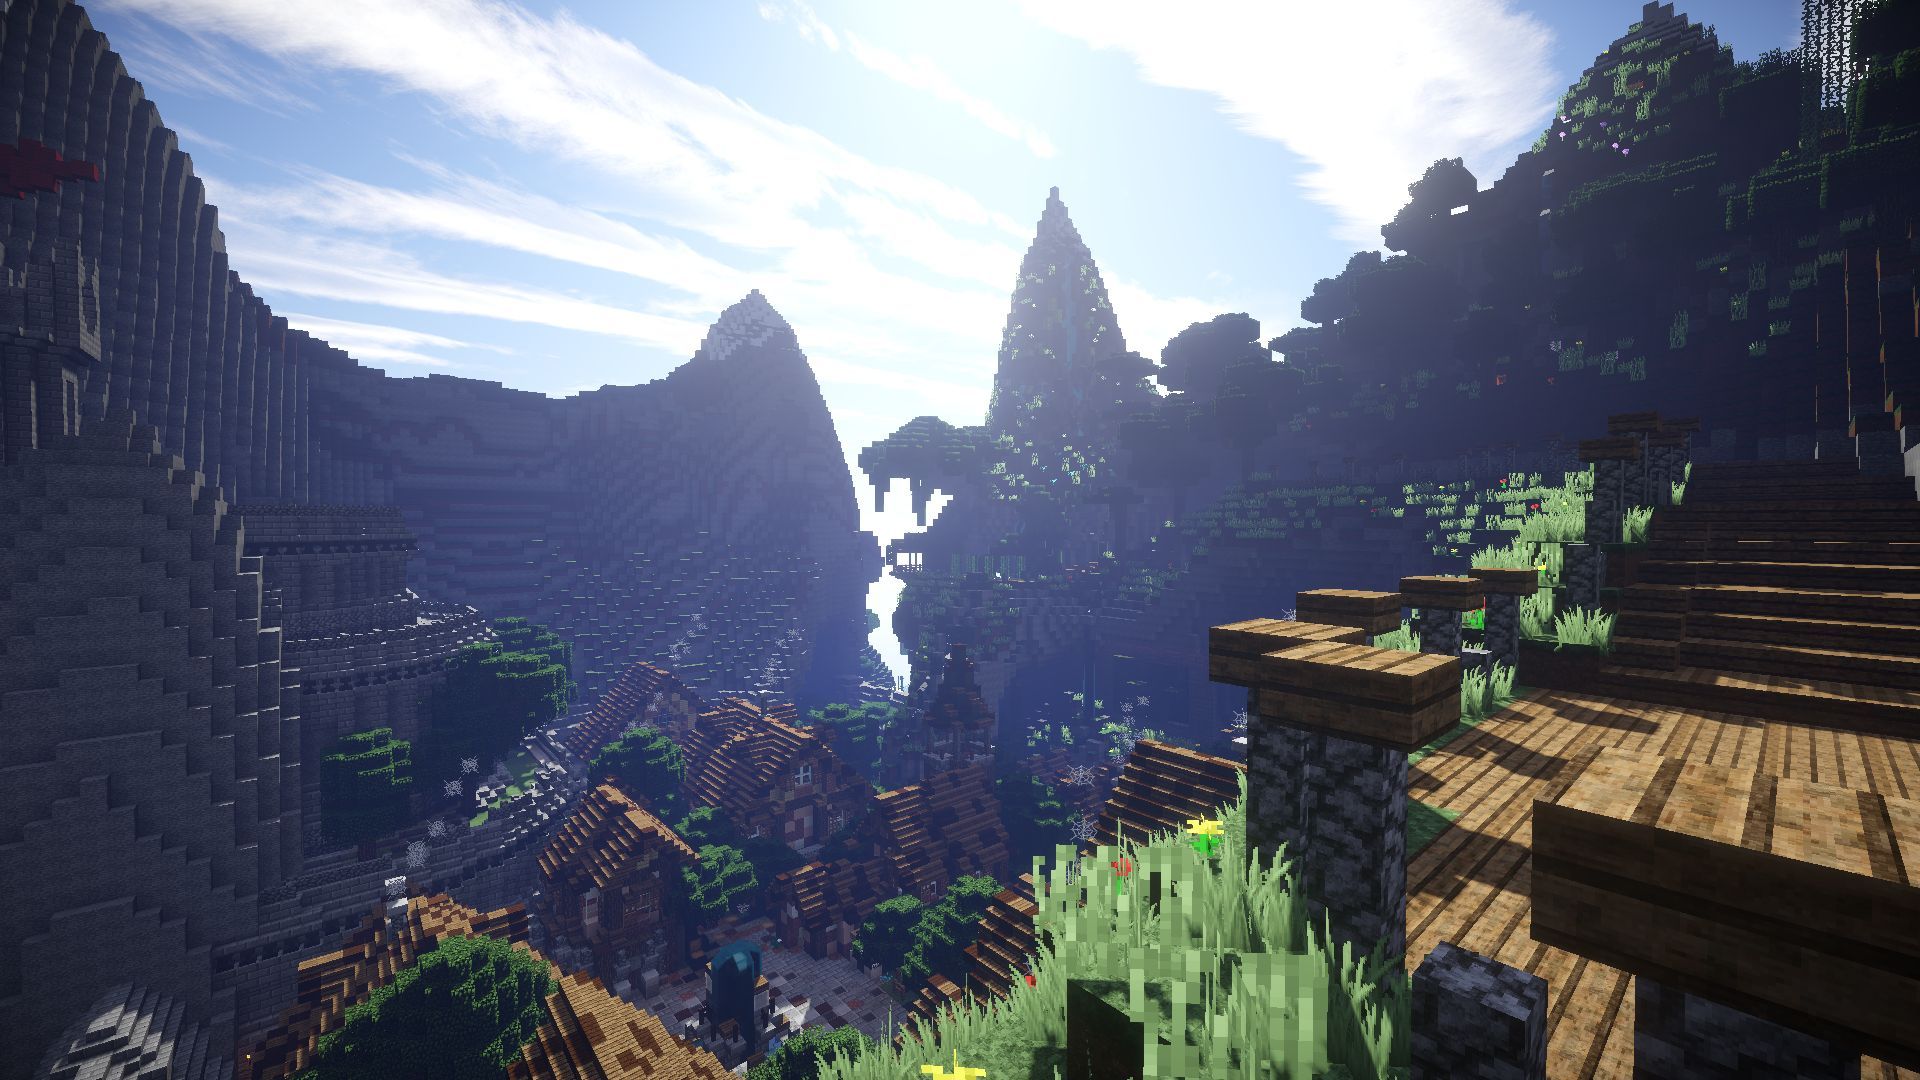 pic of minecraft scenery